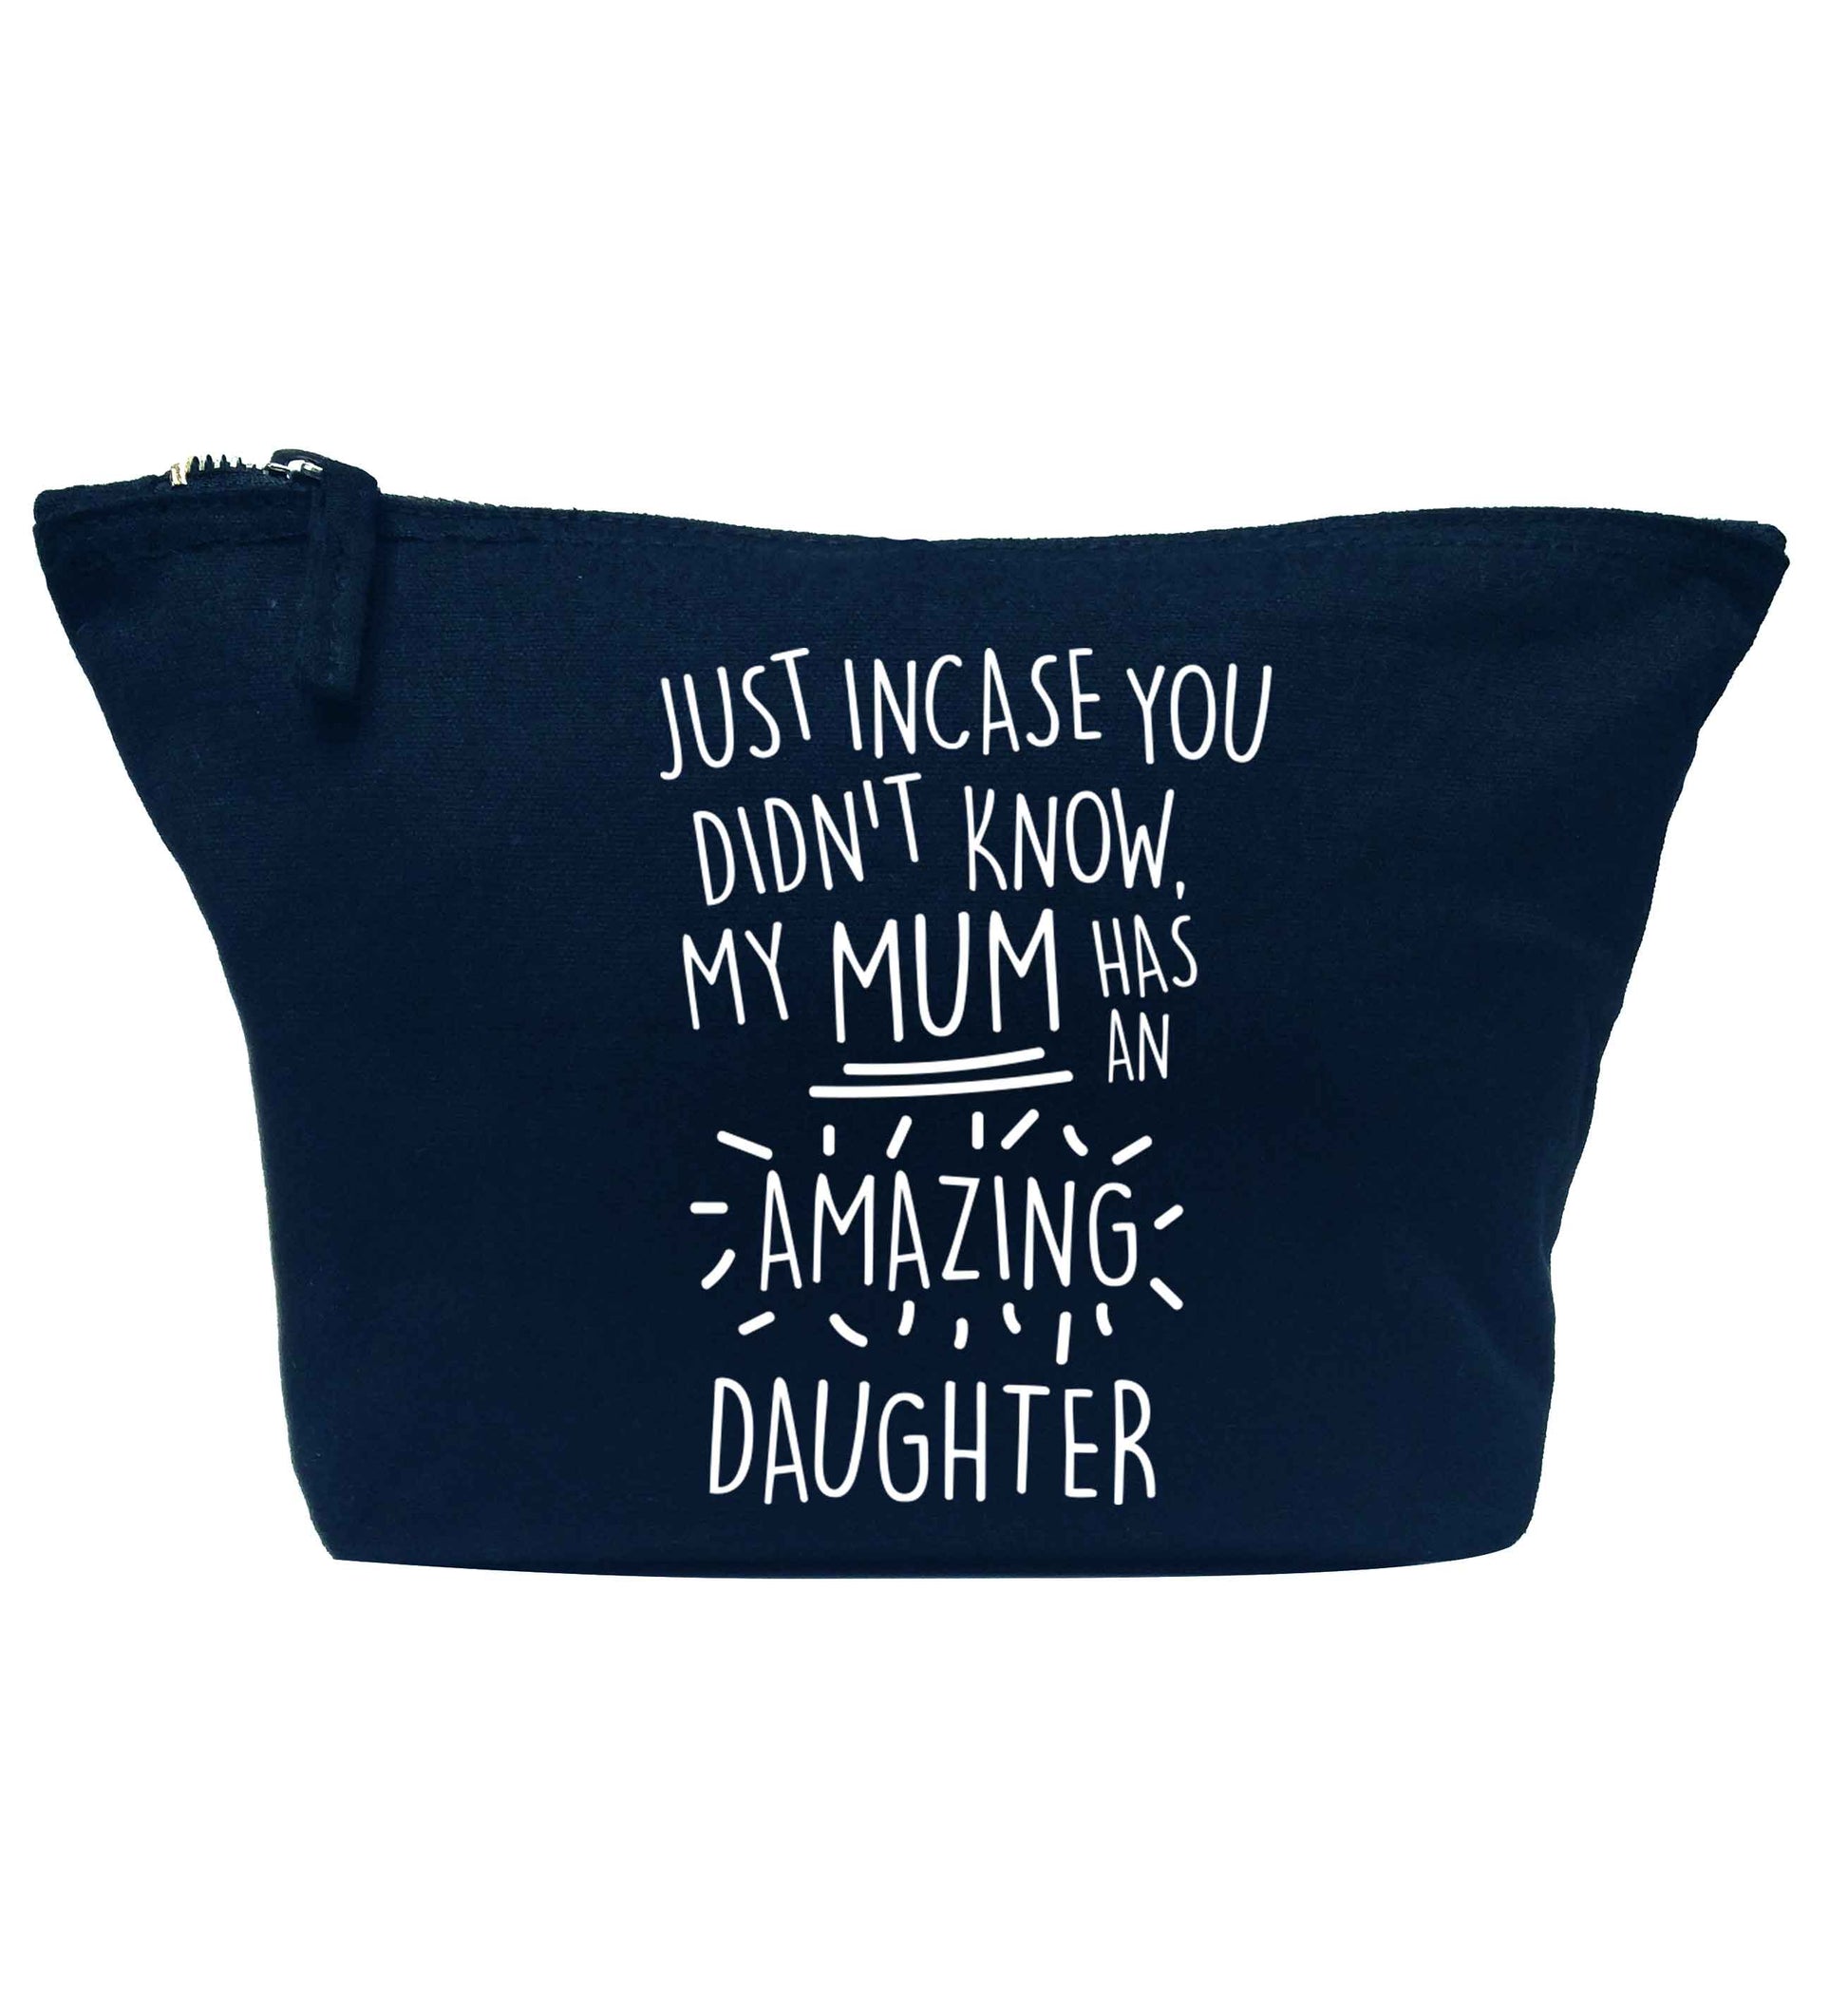 Just incase you didn't know my mum has an amazing daughter navy makeup bag